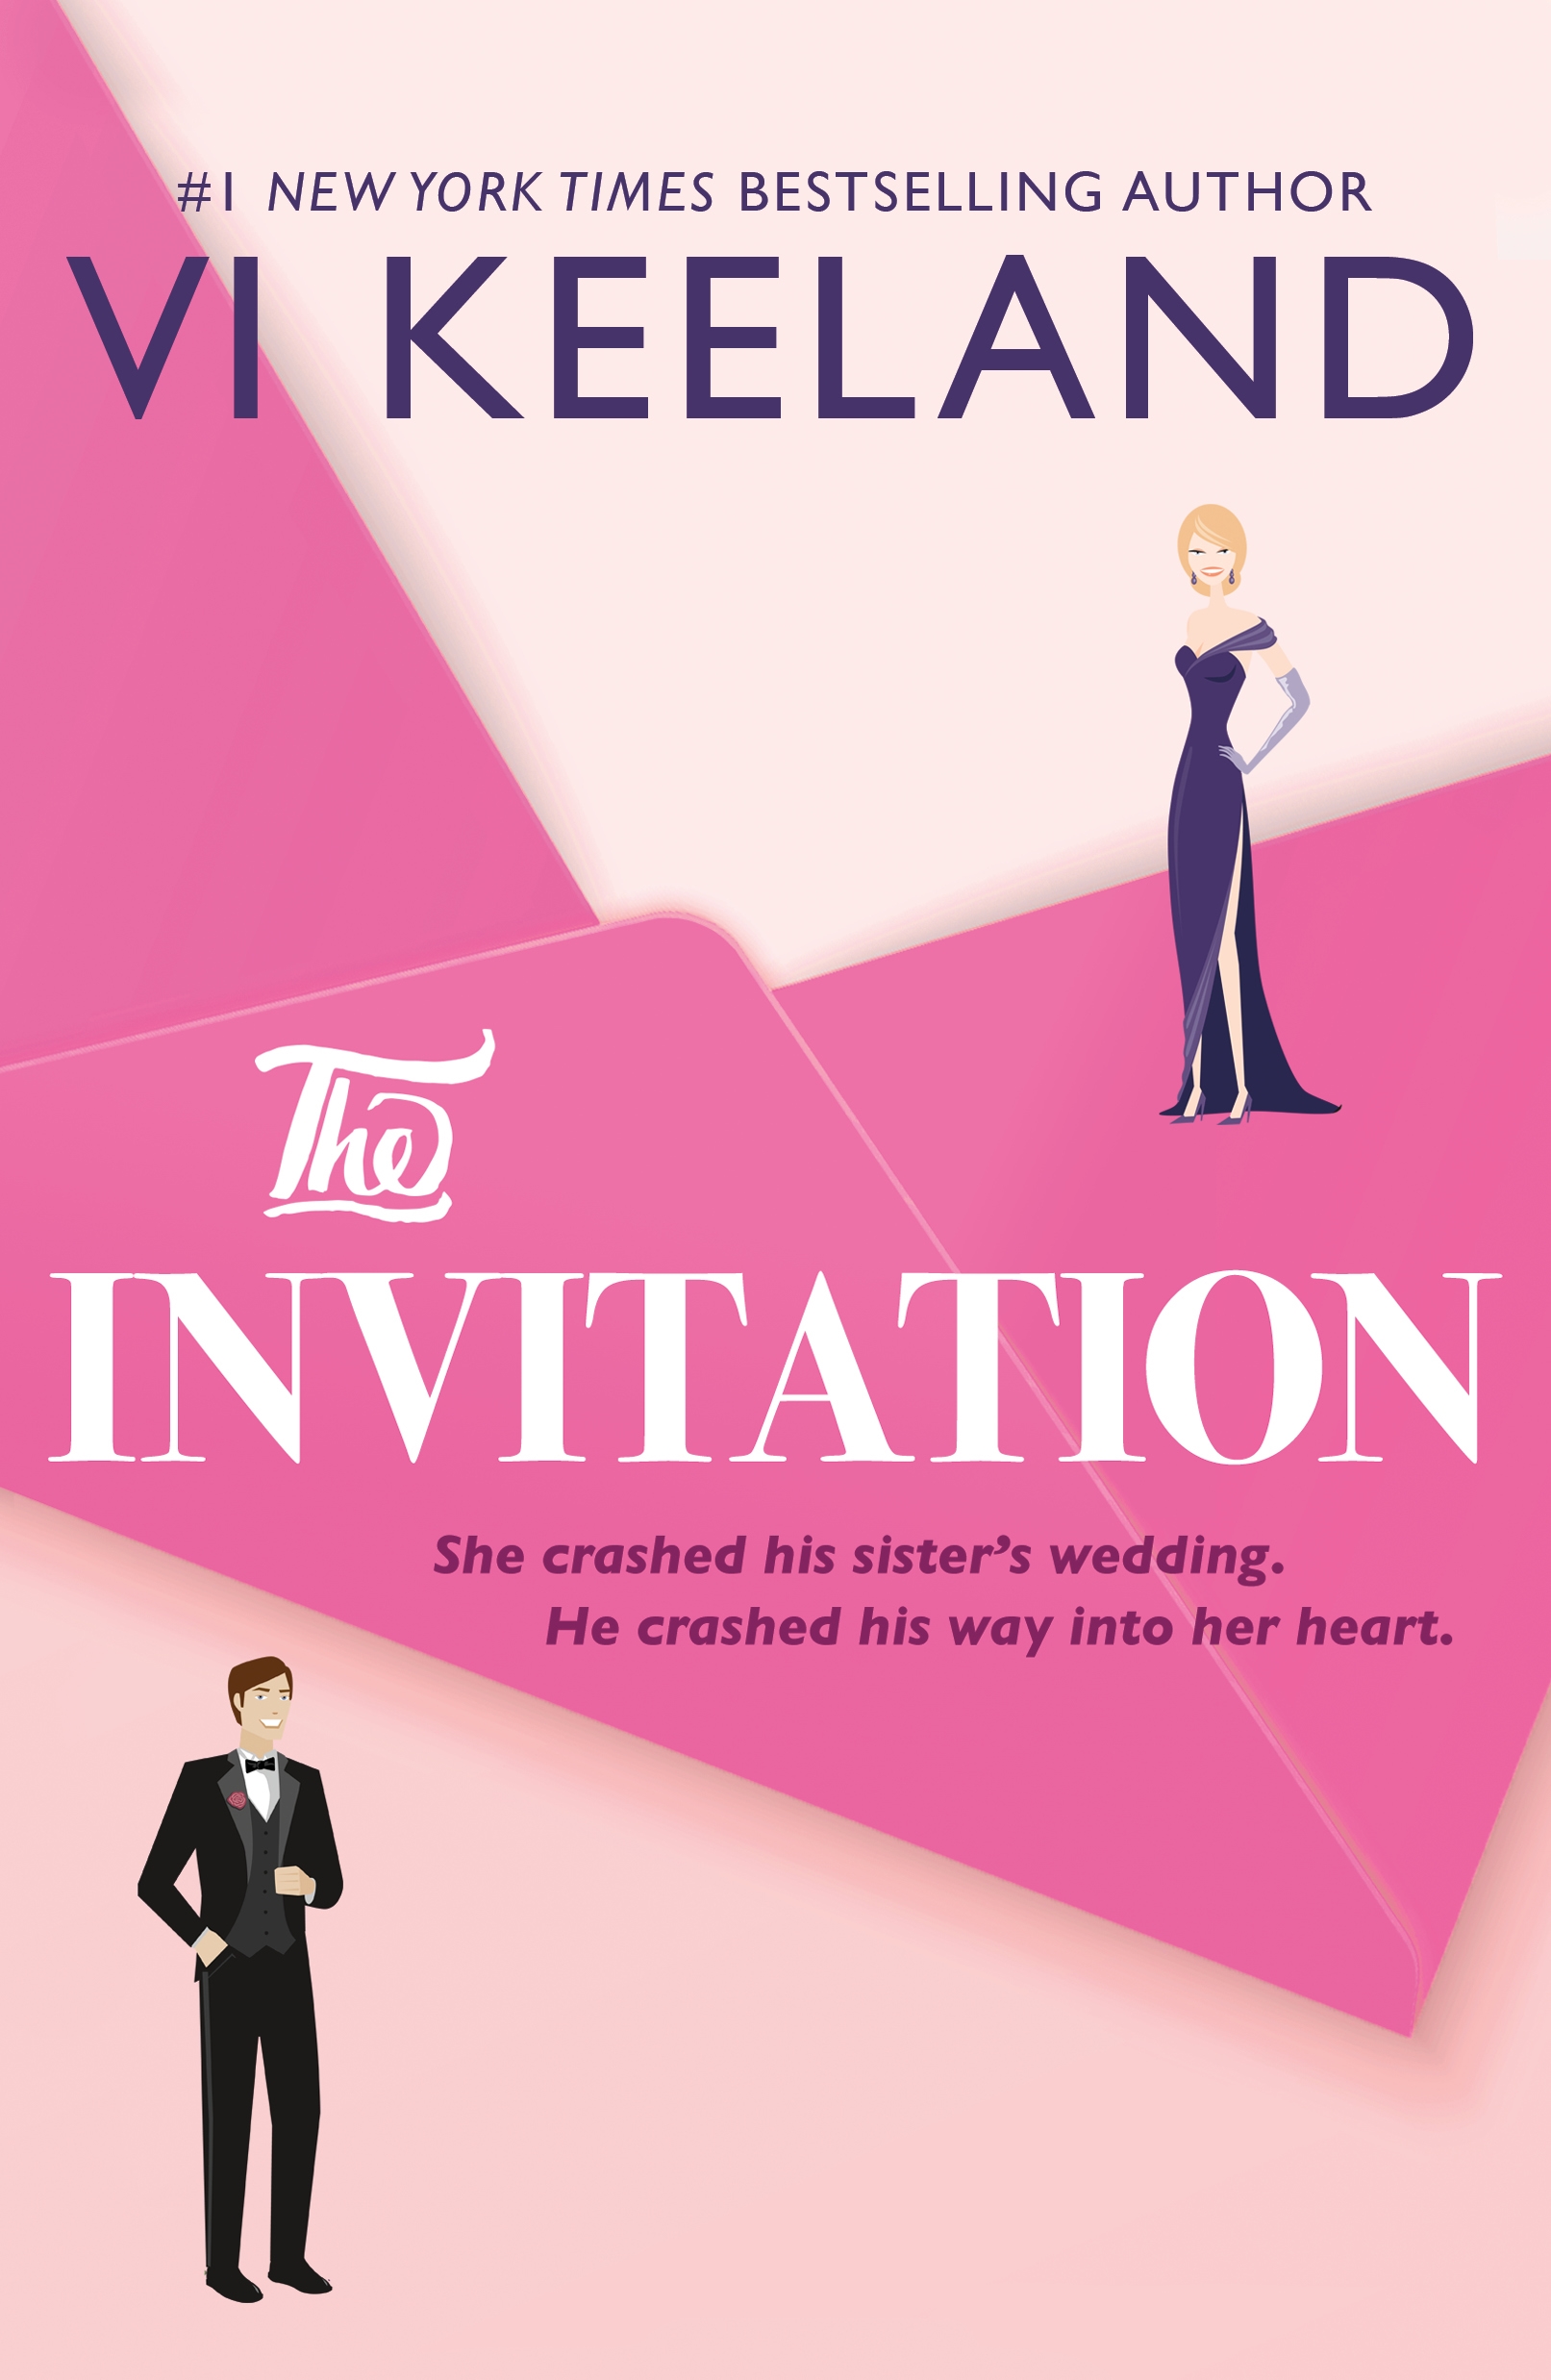 The Invitation by Vi Keeland